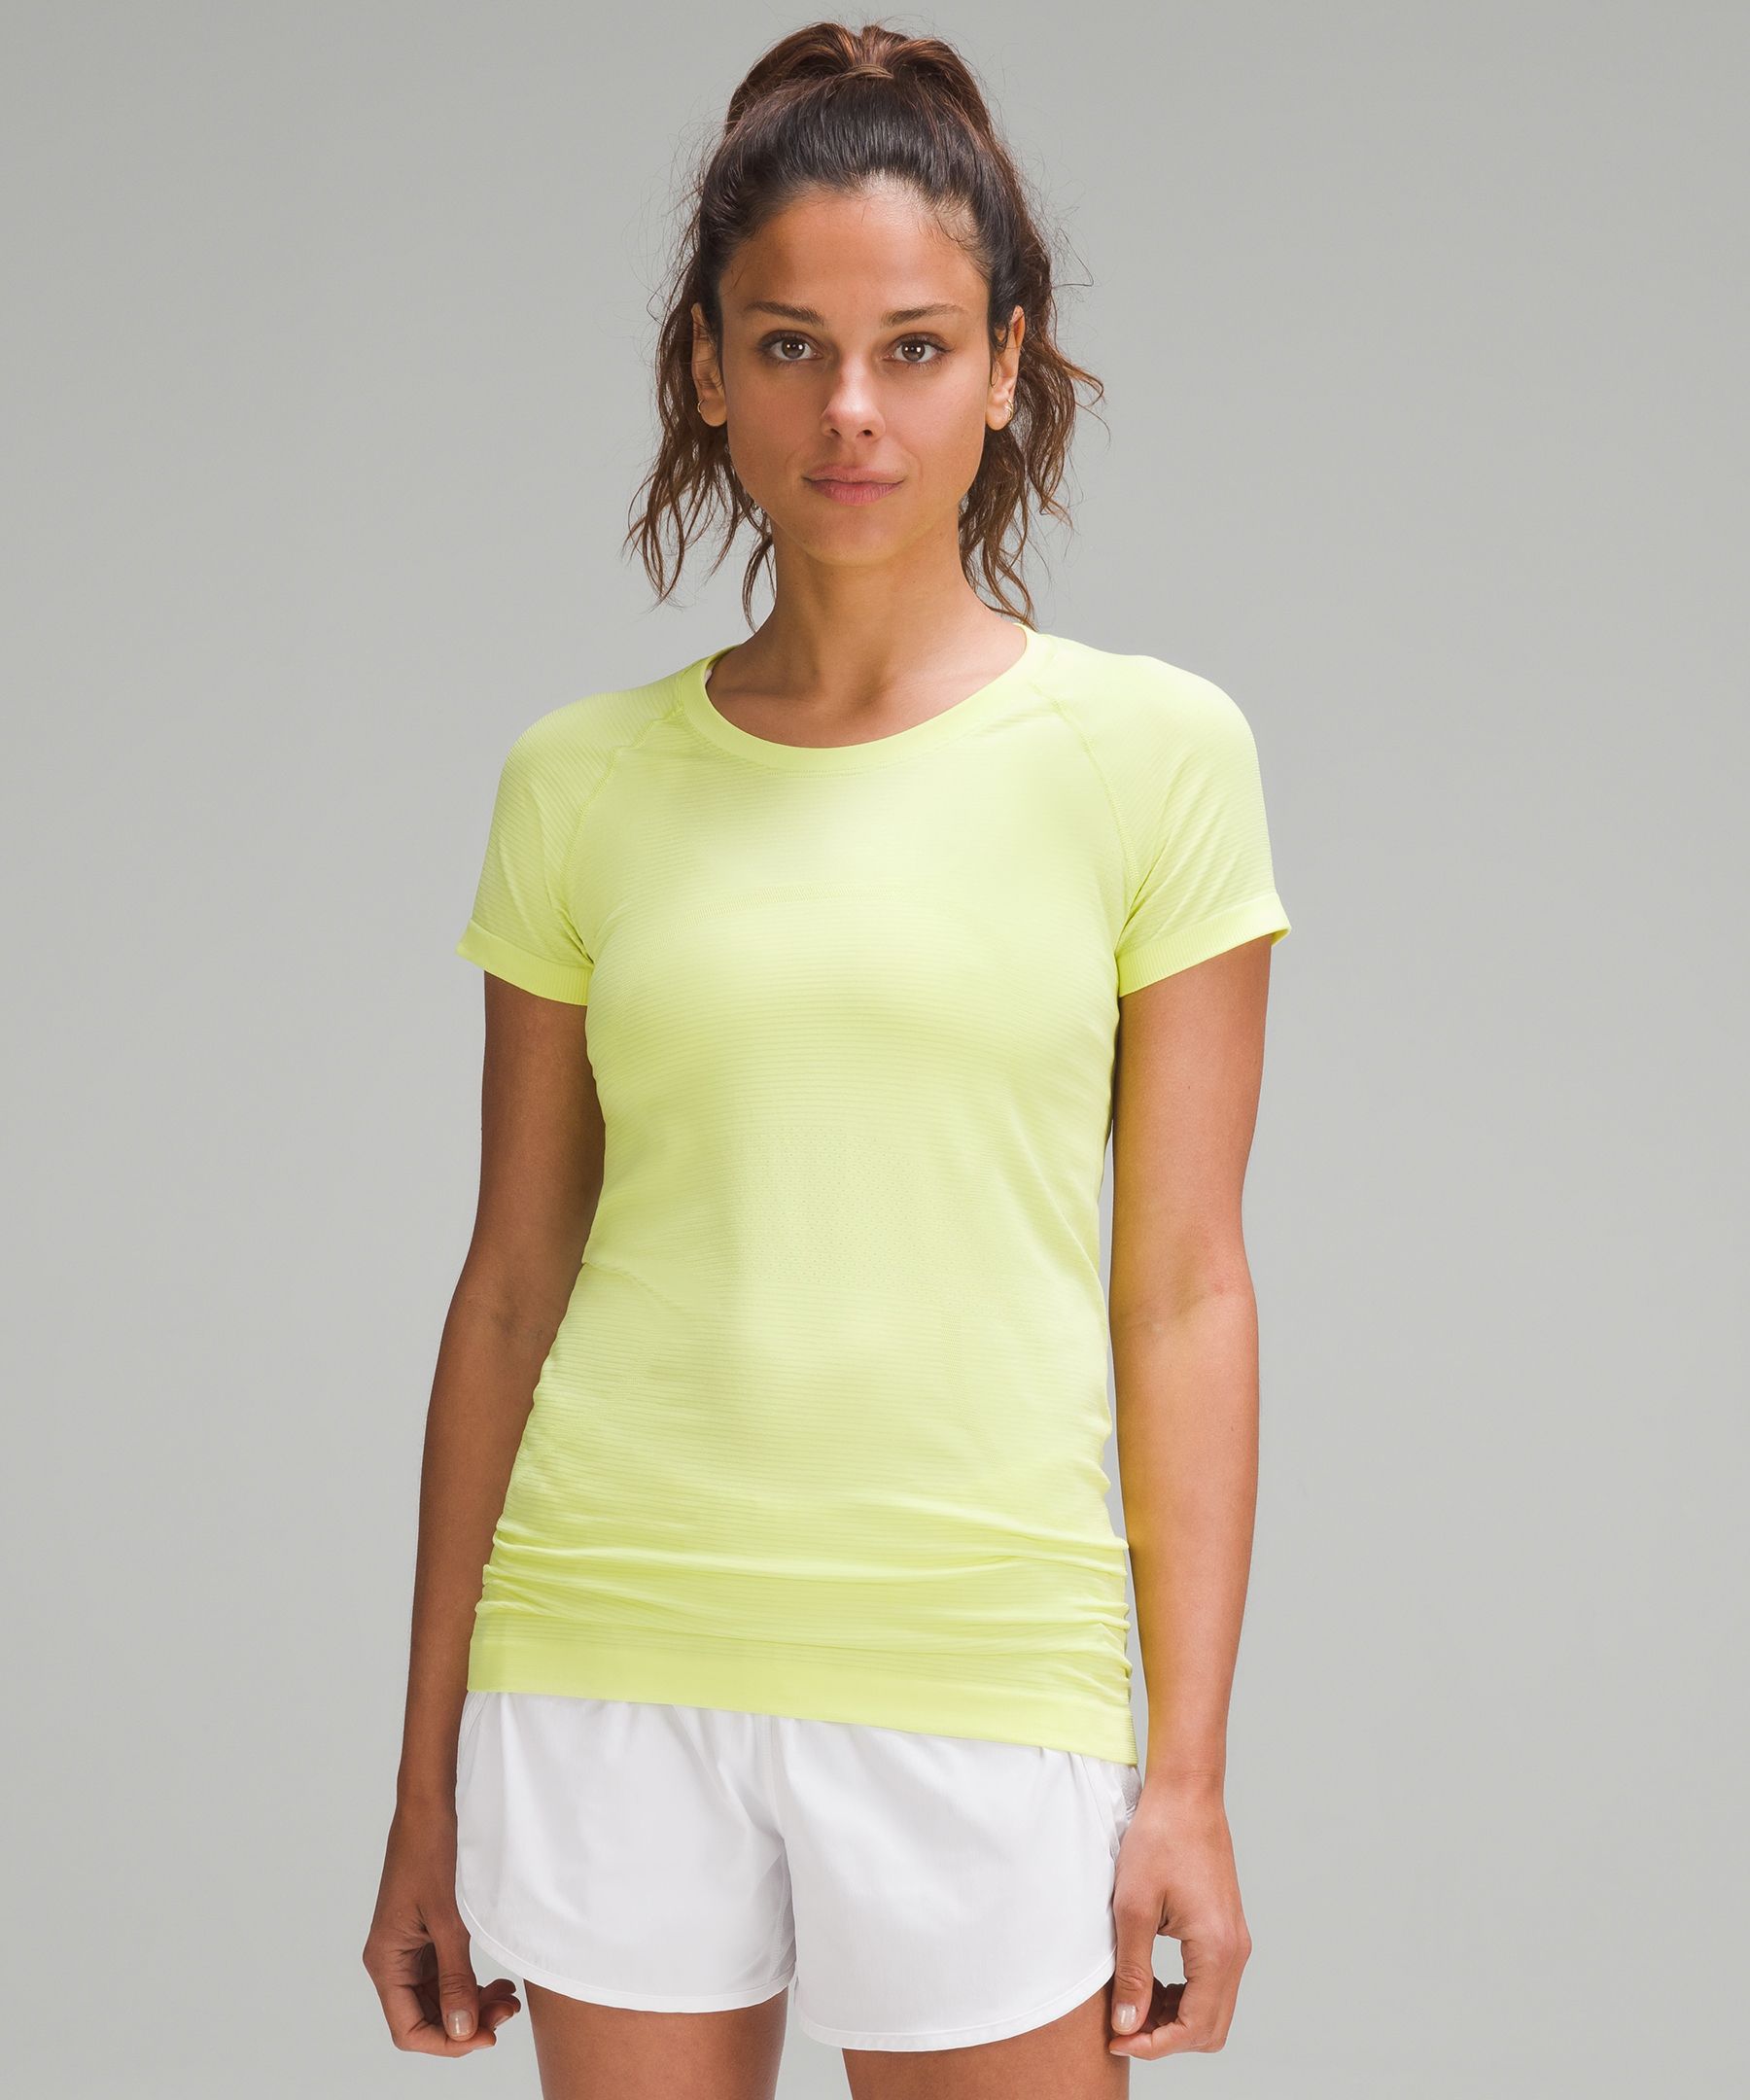 Lululemon Swiftly Tech Short Sleeve Shirt 2.0 In Electric Lemon/electric Lemon